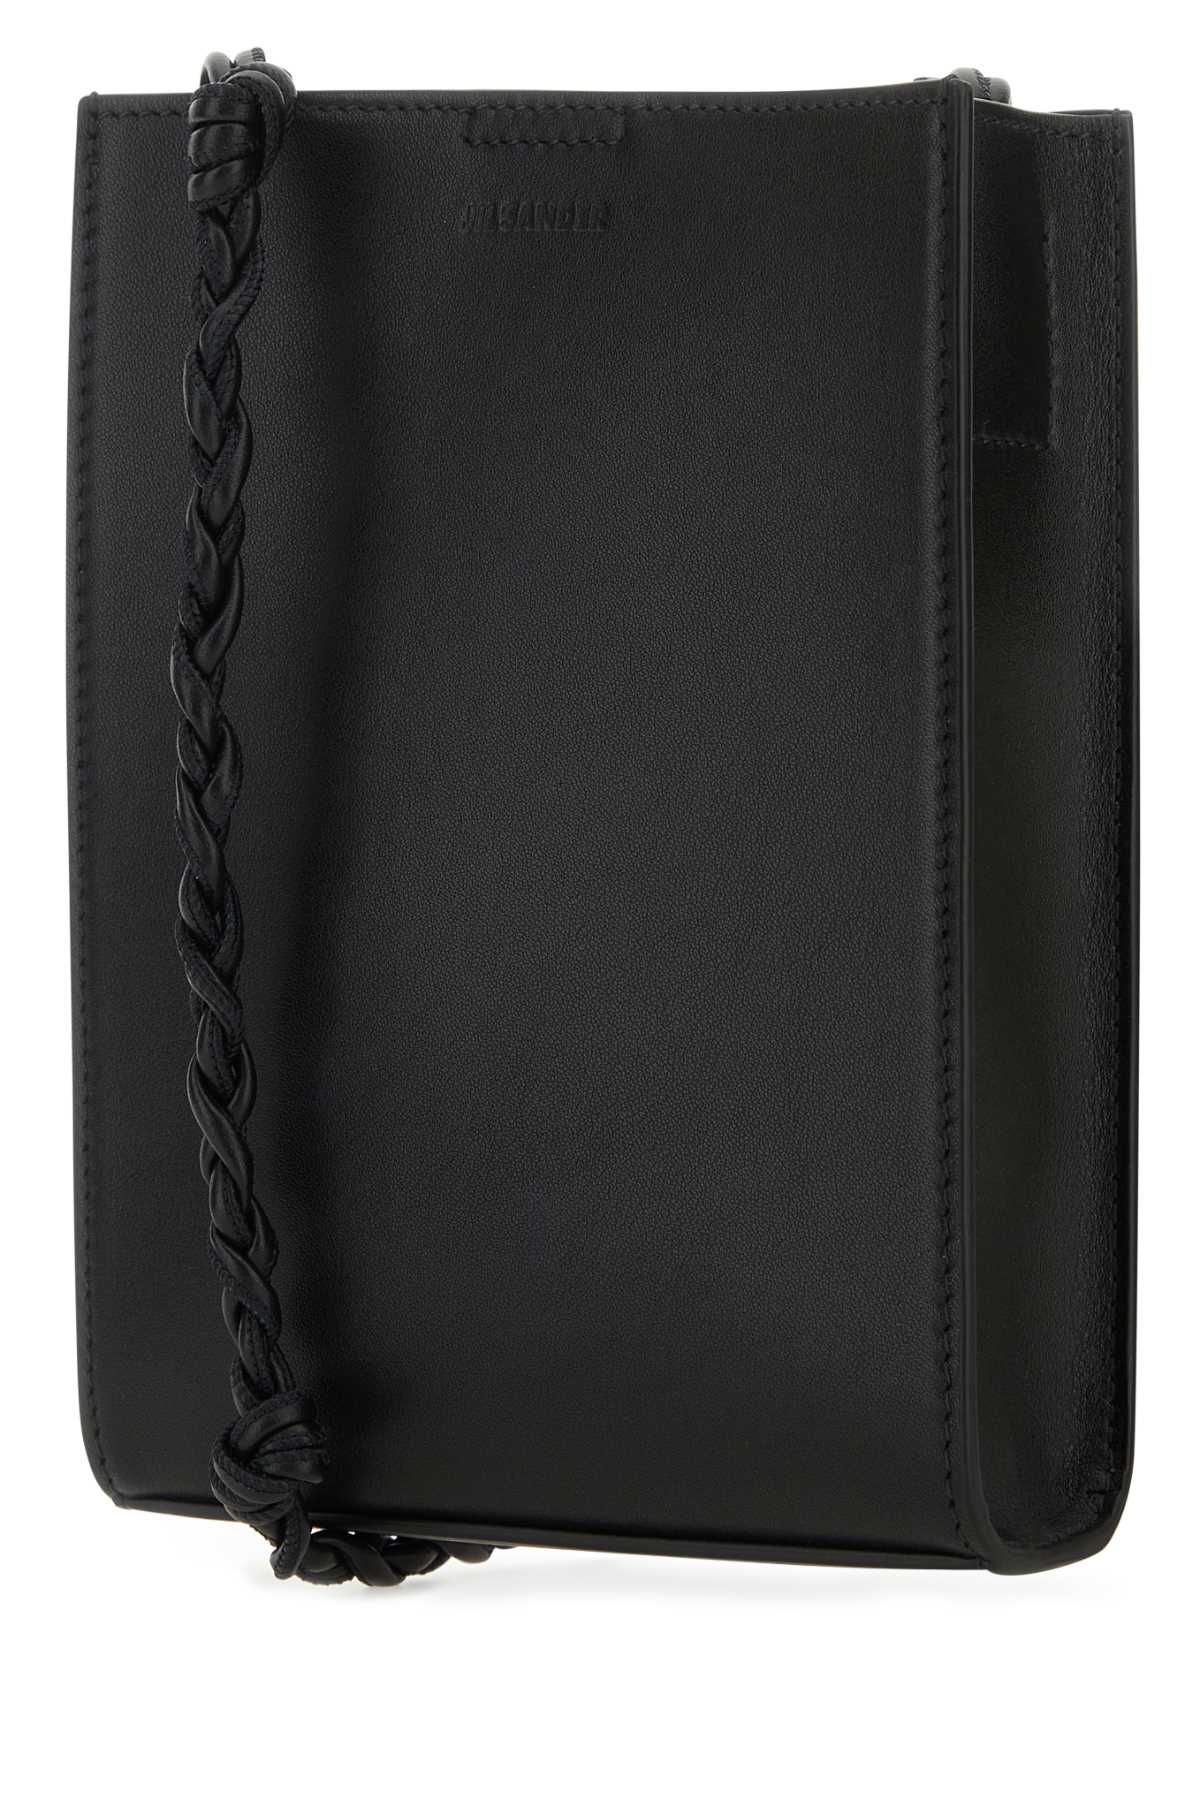 Jil Sander Black Leather Small Tangle Crossbody Bag In 001